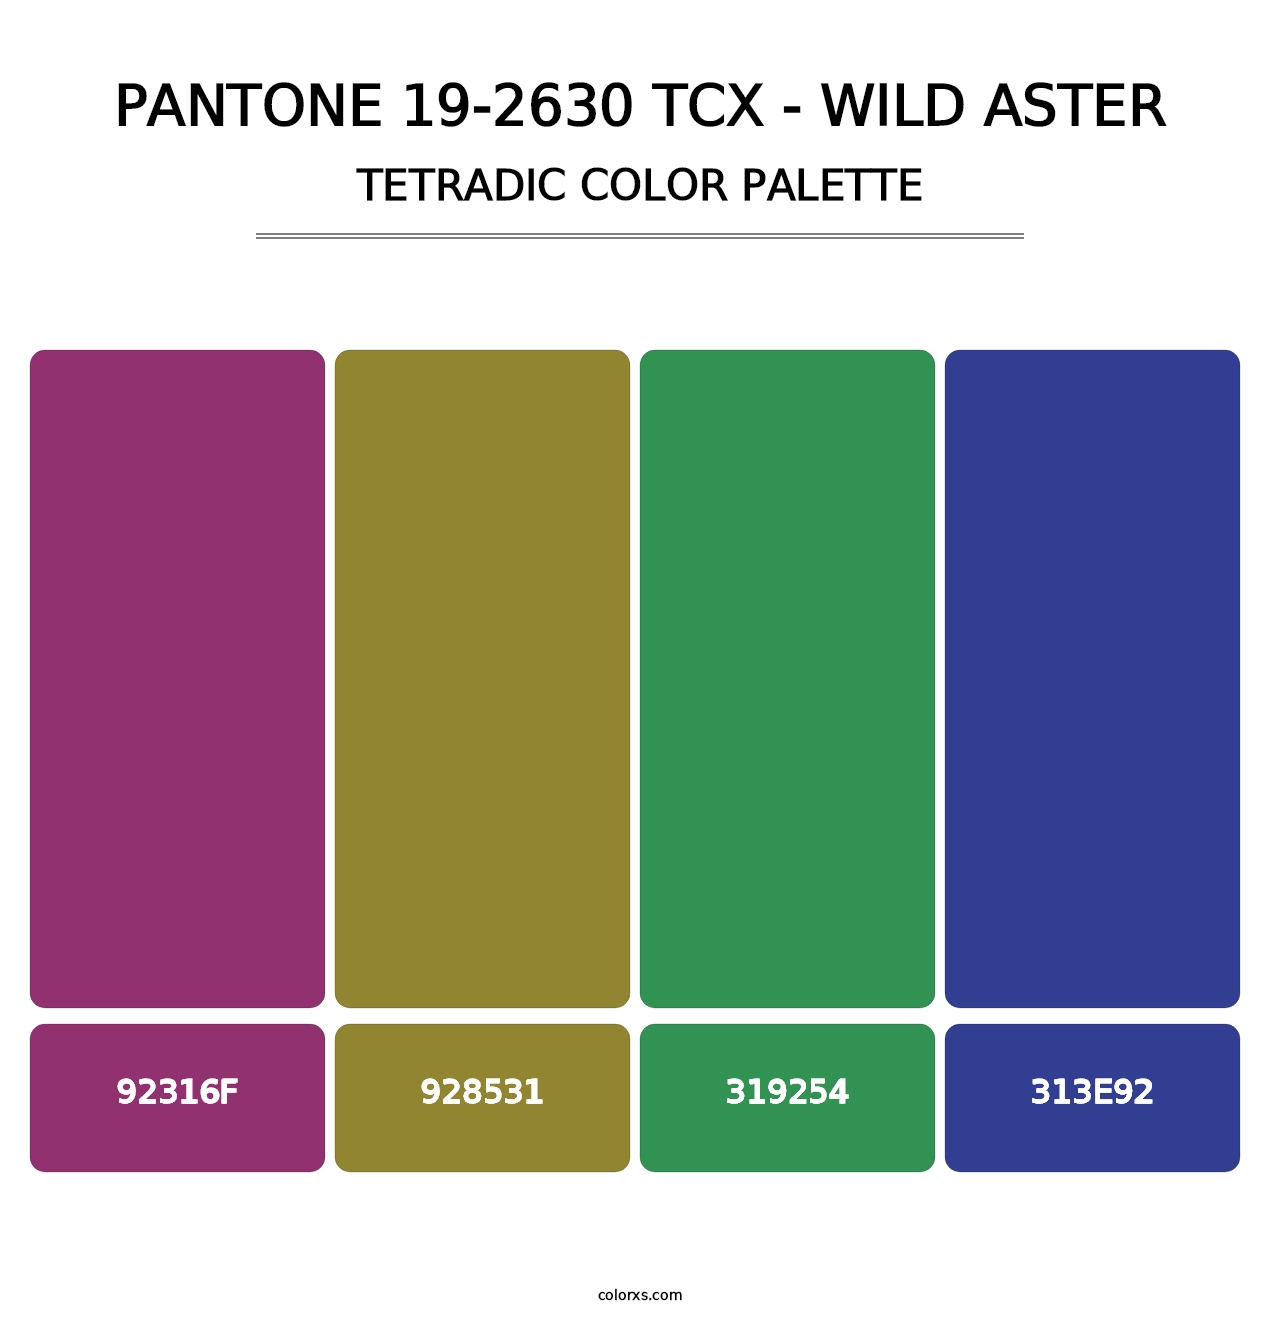 PANTONE 19-2630 TCX - Wild Aster - Tetradic Color Palette